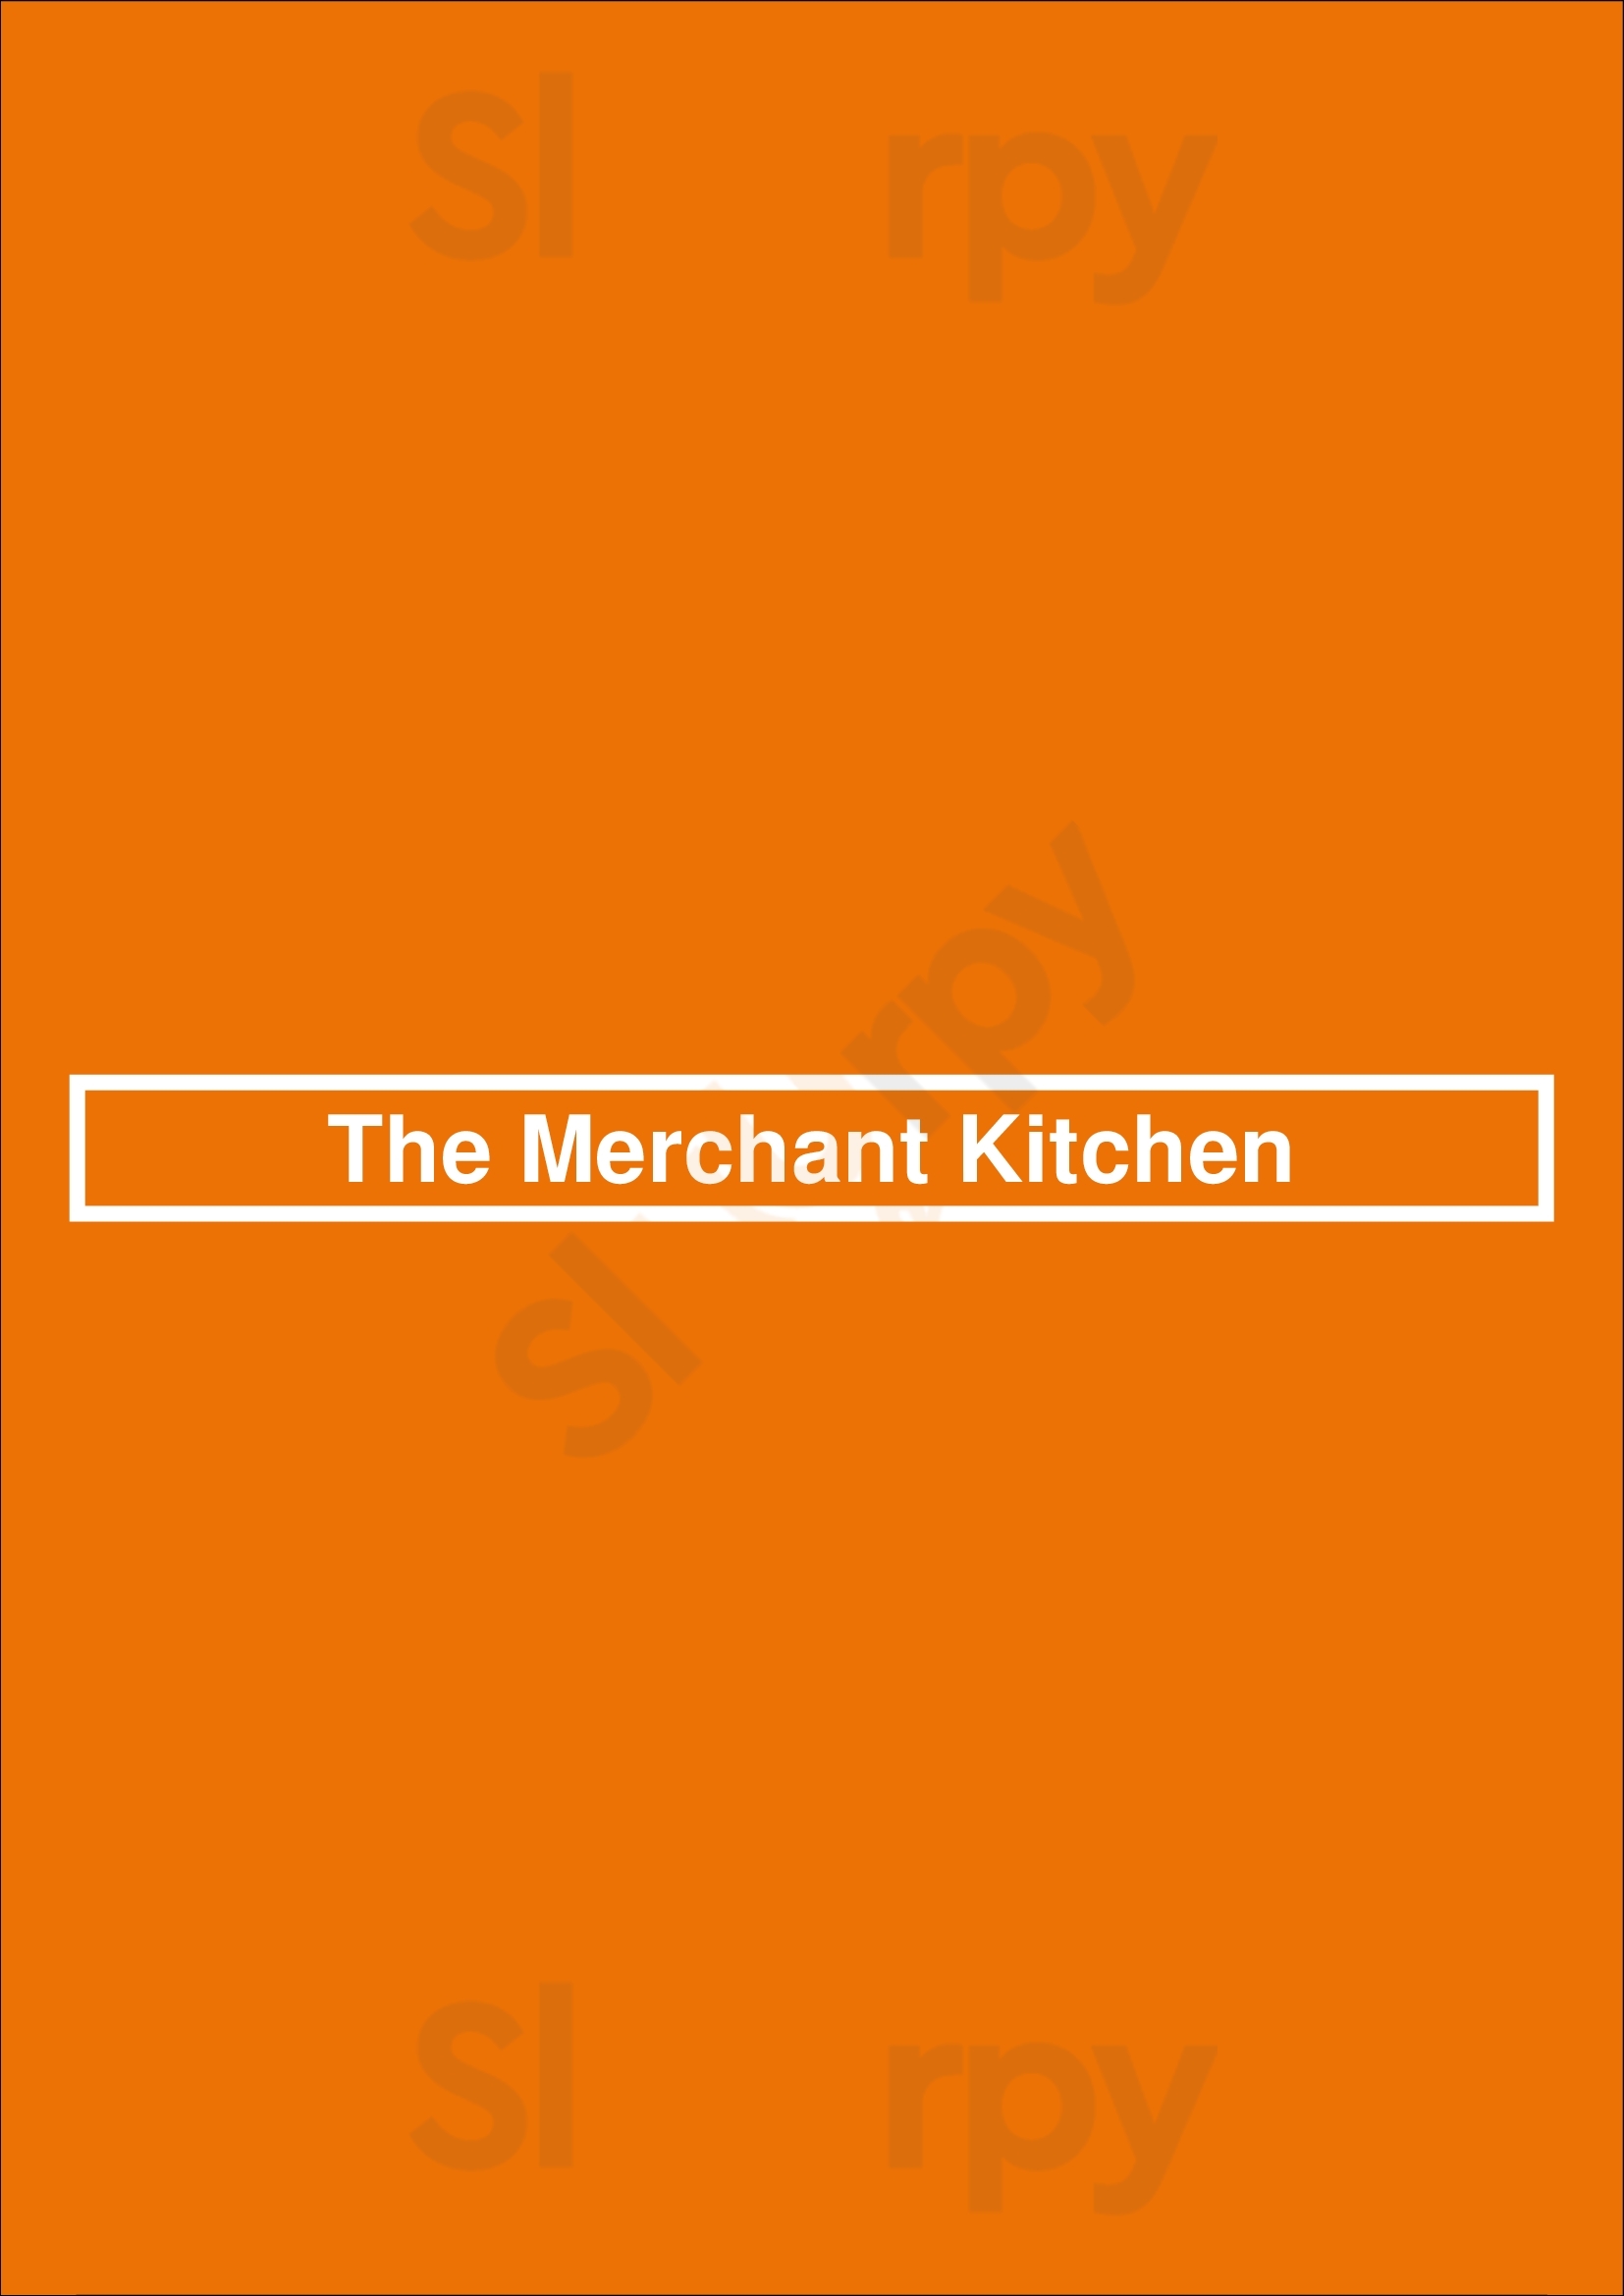 The Merchant Kitchen Winnipeg Menu - 1